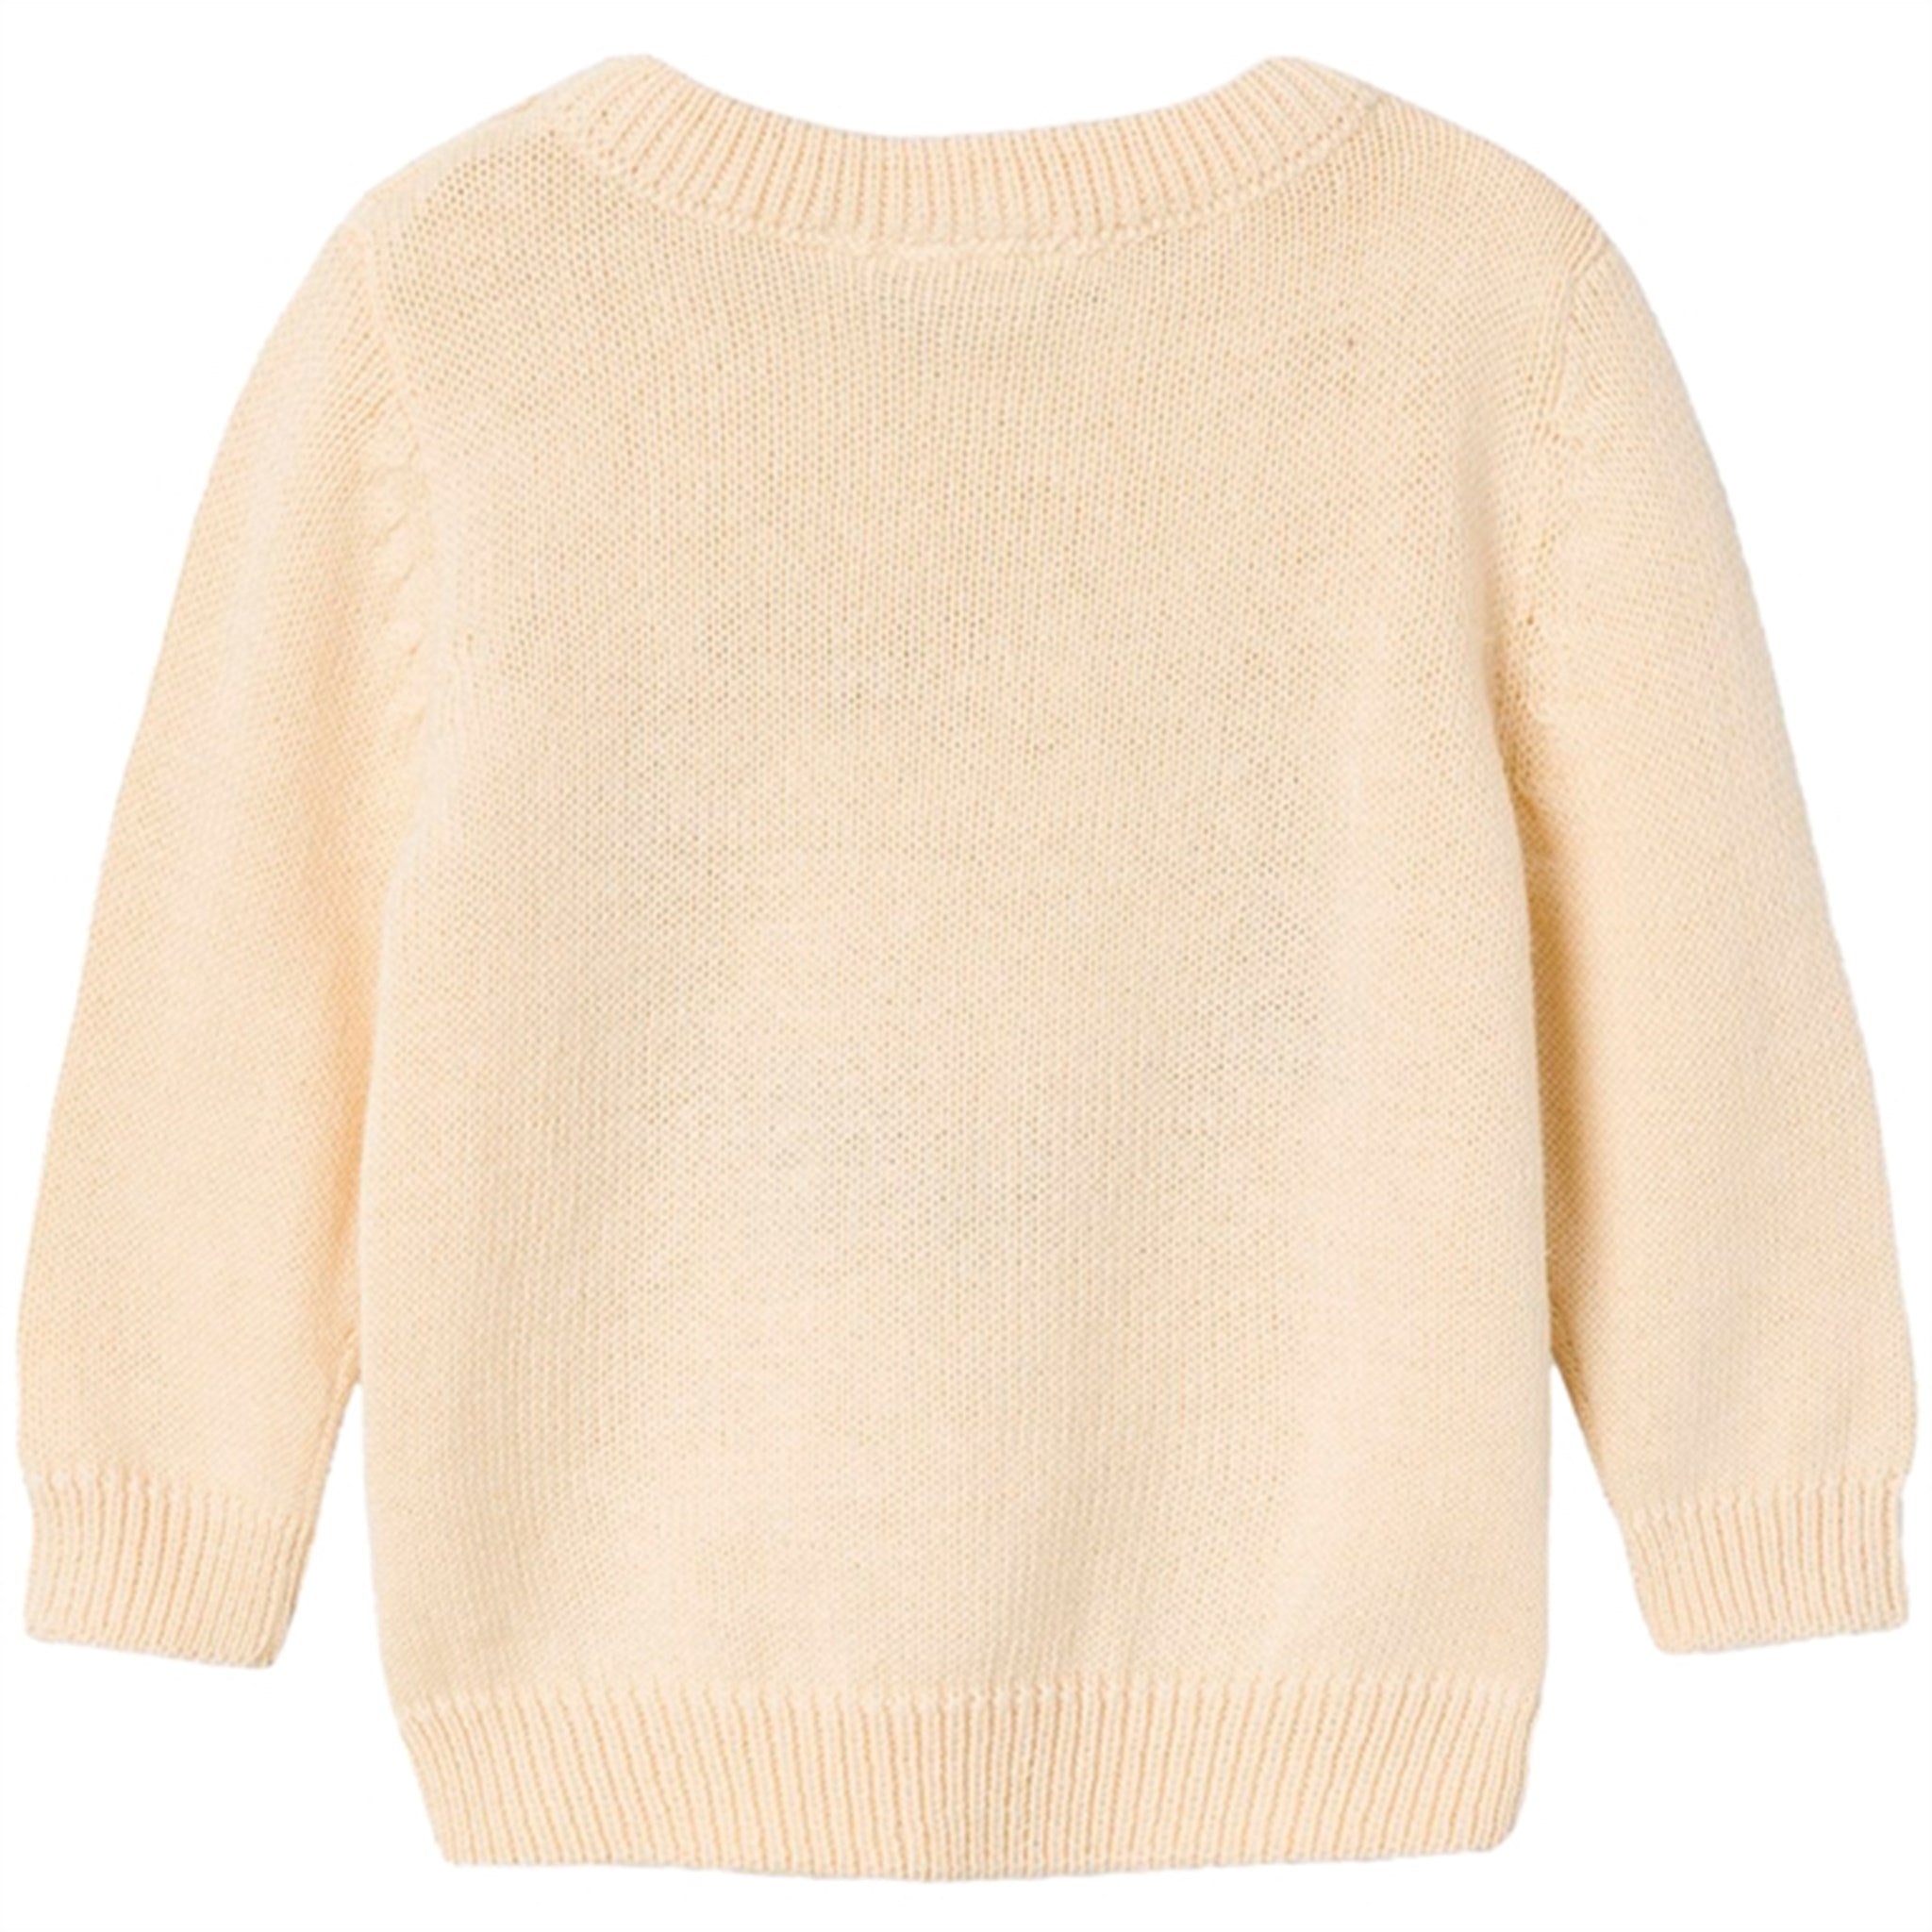 Name it Buttercream Lifine Strikk Sweater 2